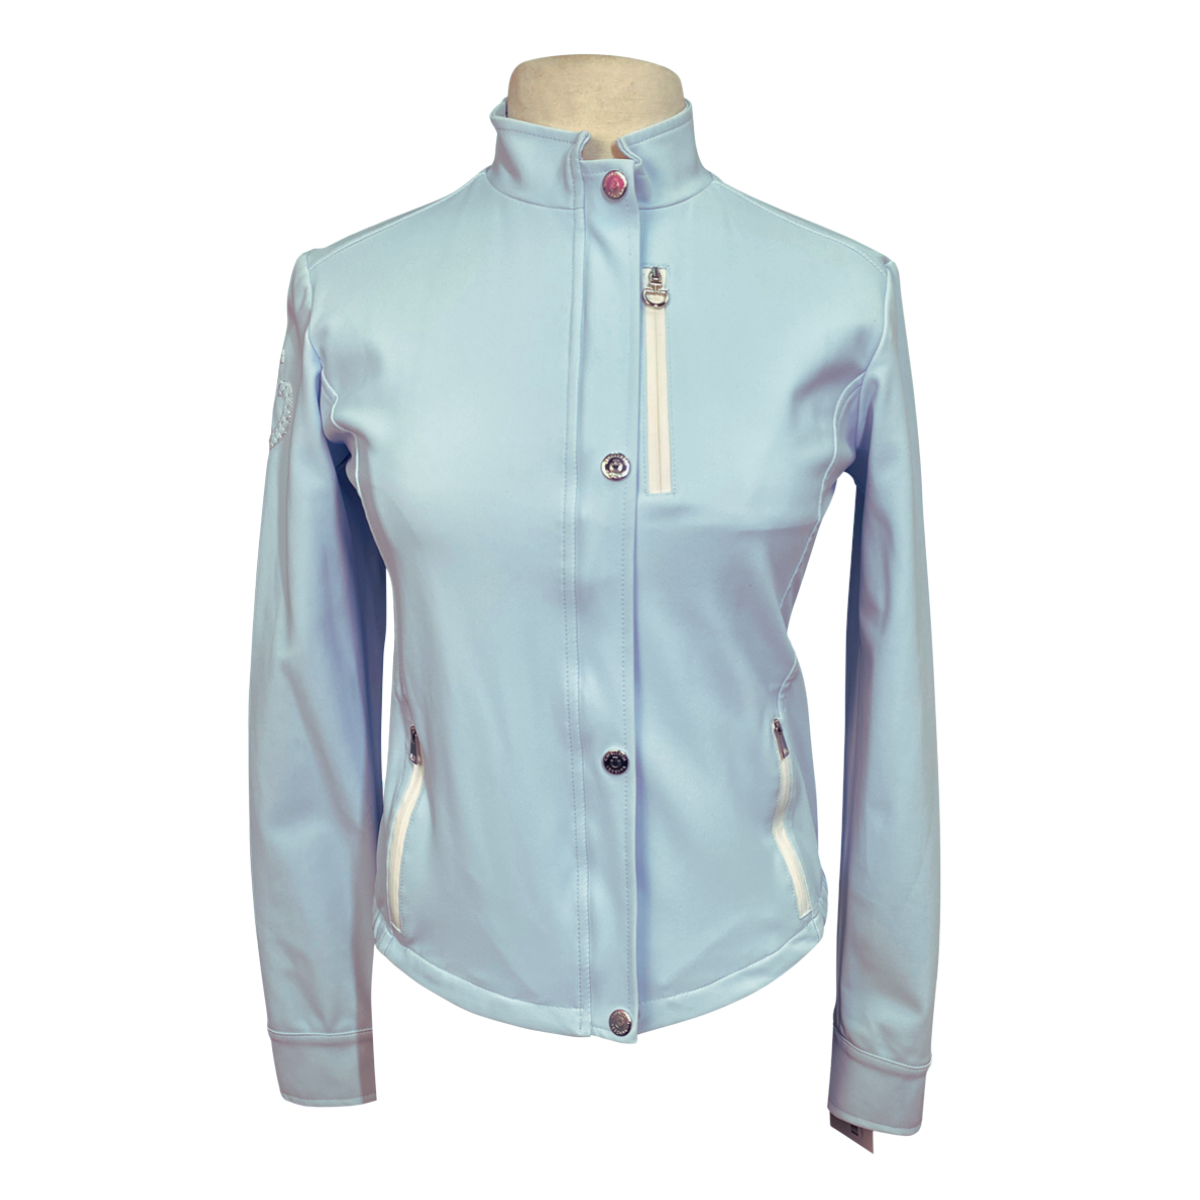 Cavalleria Toscana Softshell Jacket in Baby Blue